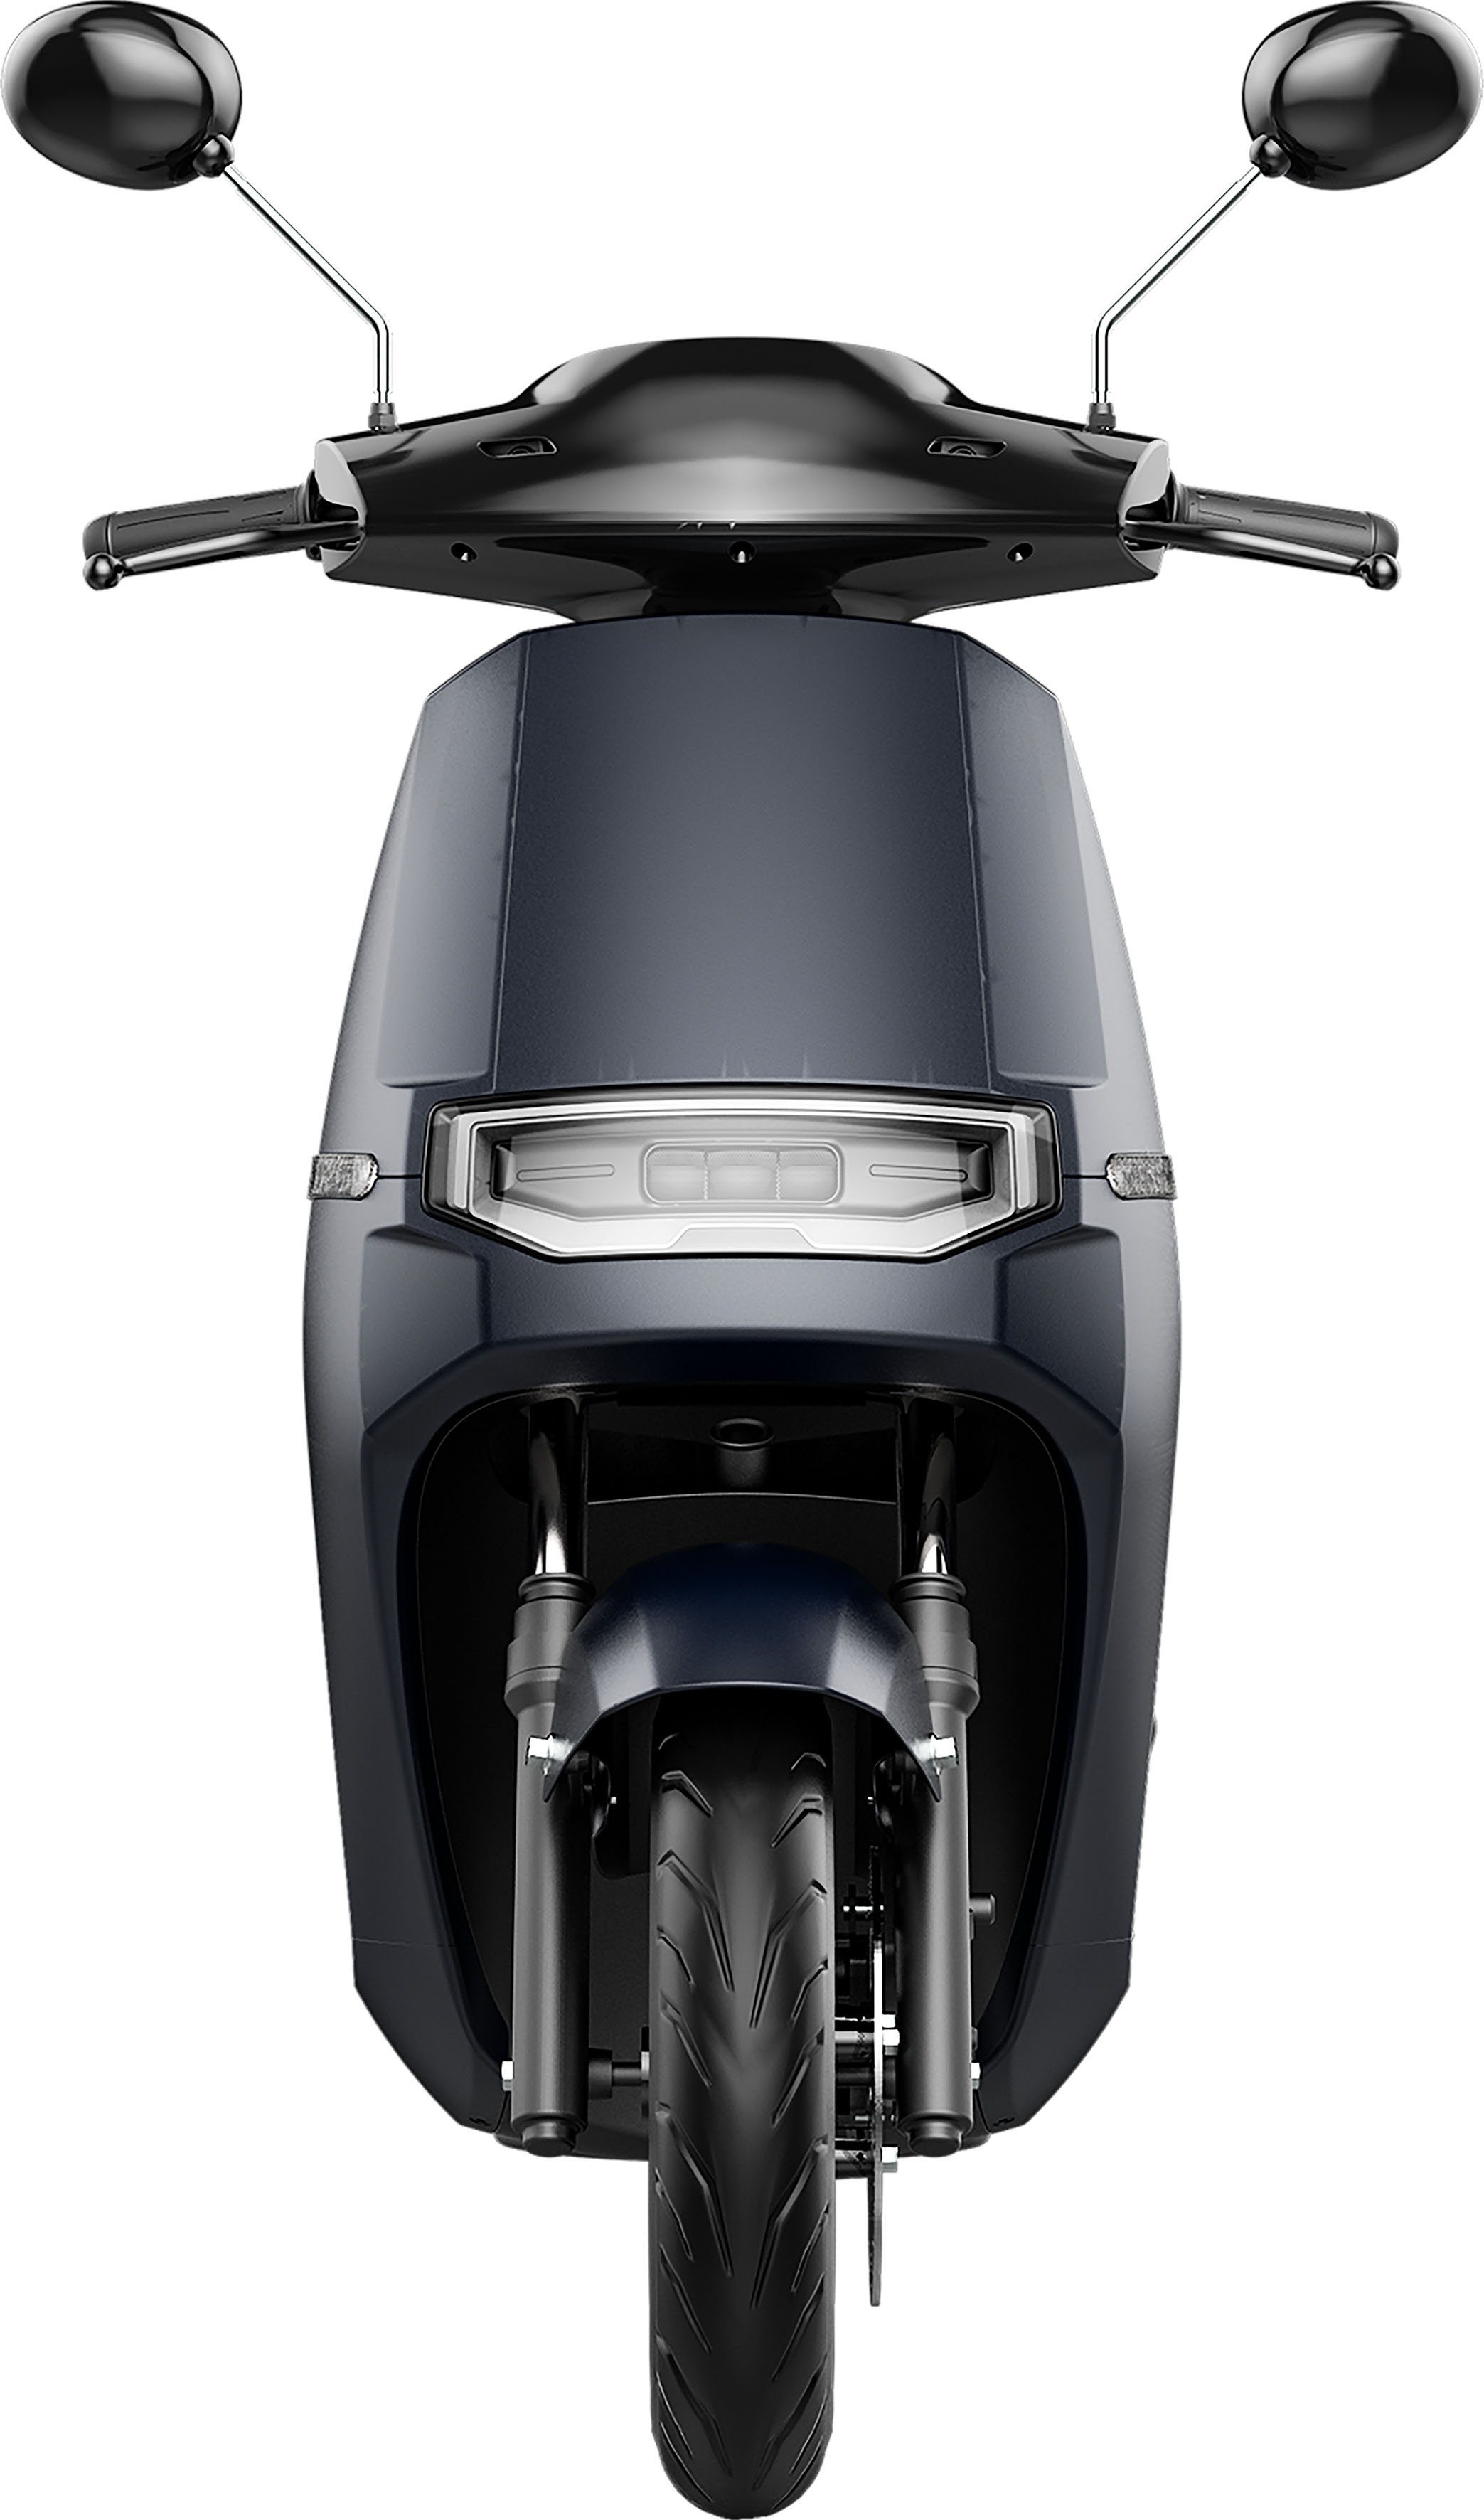 SAXXX E-Motorroller Ecooter km/h 75 E2R, schwarz